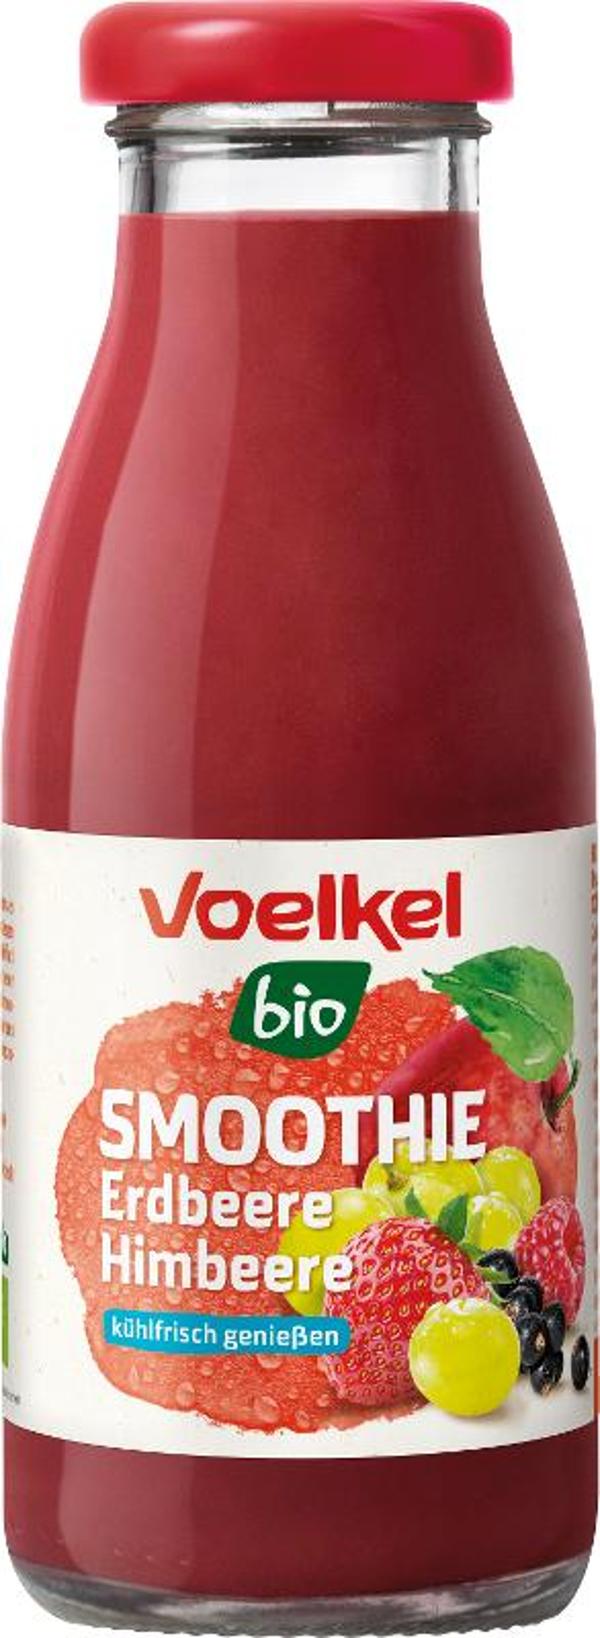 Produktfoto zu VPE Smoothie Erdbeere Himbeere 6x0,25l Voelkel